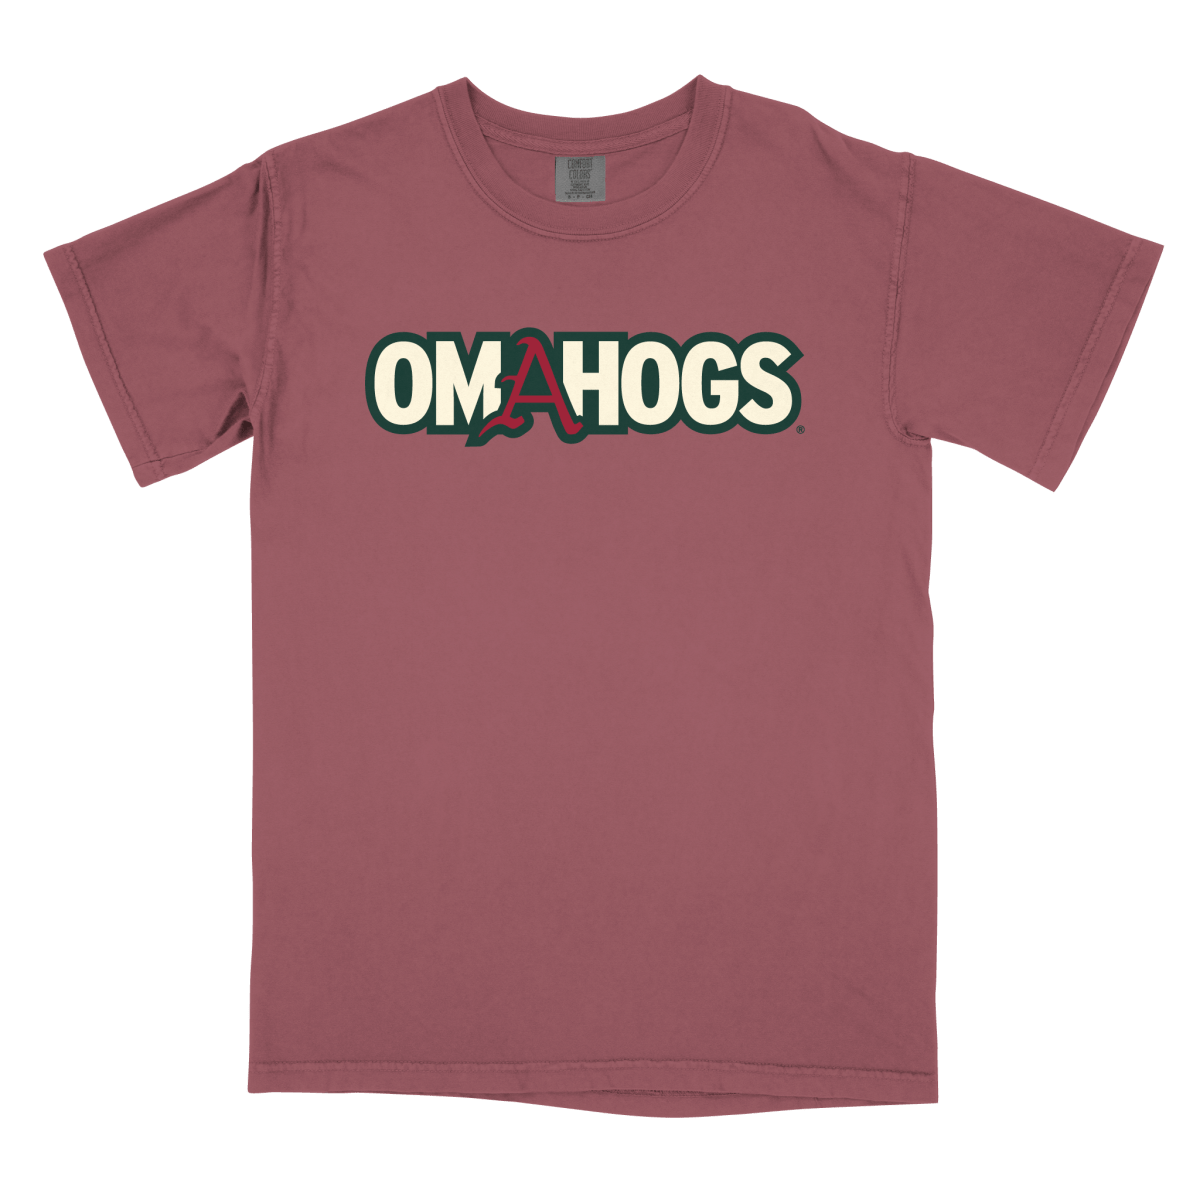 University of Arkansas Omahogs T-Shirt - Shop B-Unlimited